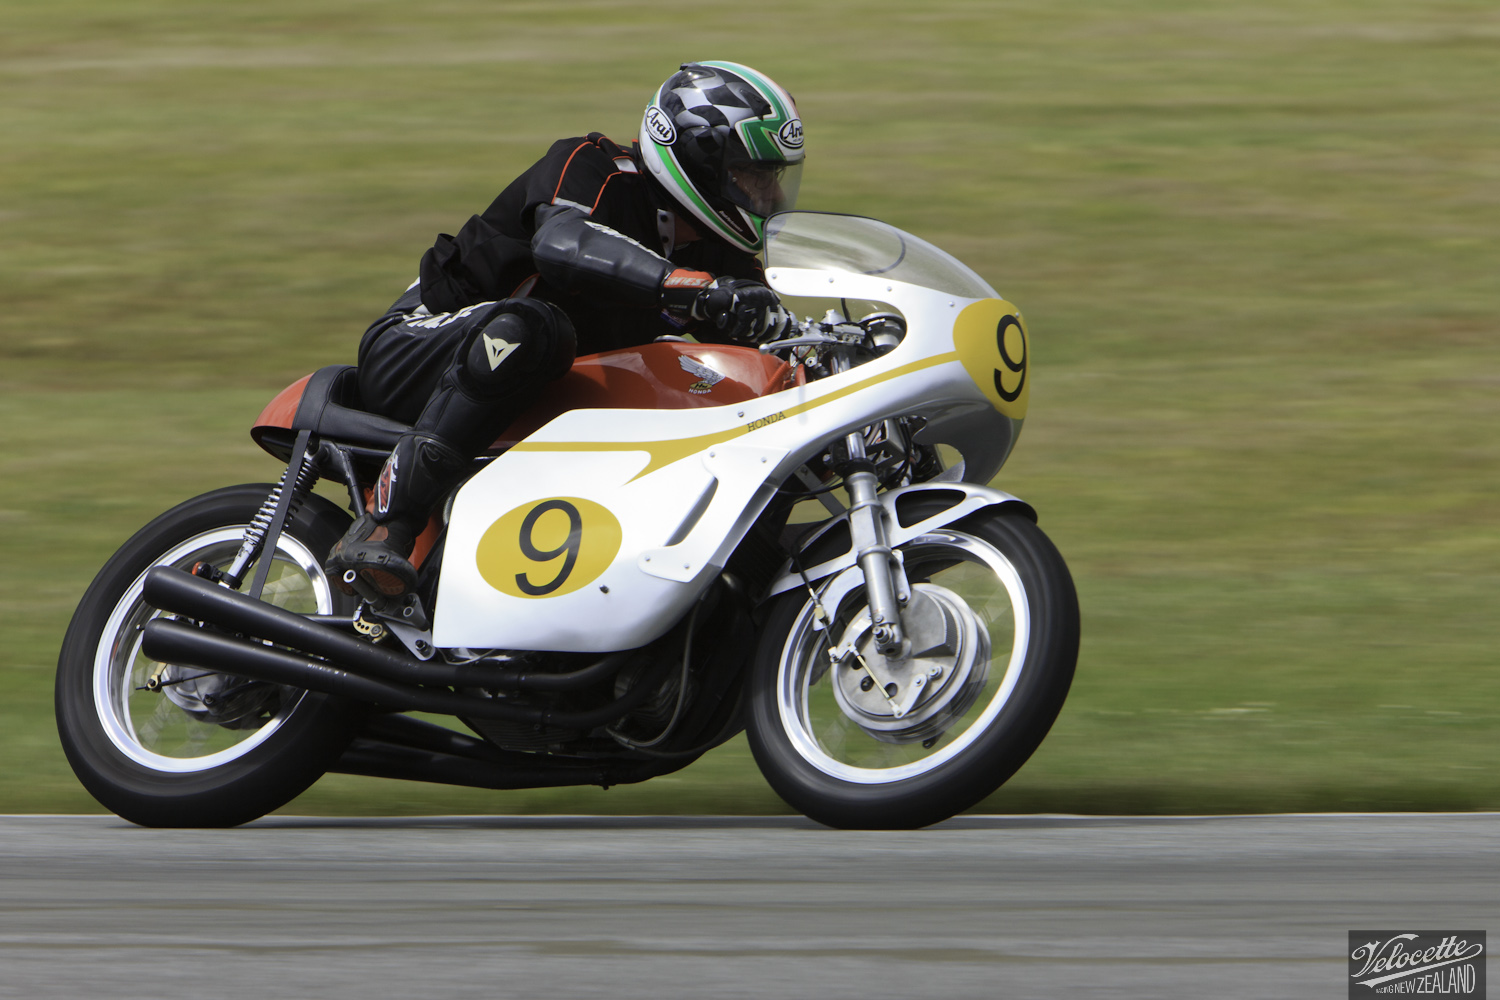 Burt Munro Challenge, Classic Motorcycle Racing, Harley Superglide 1340, Lee Cooper, New Zealand, Post Classic Pre ’72, Rider 9, Teretonga Circuit races